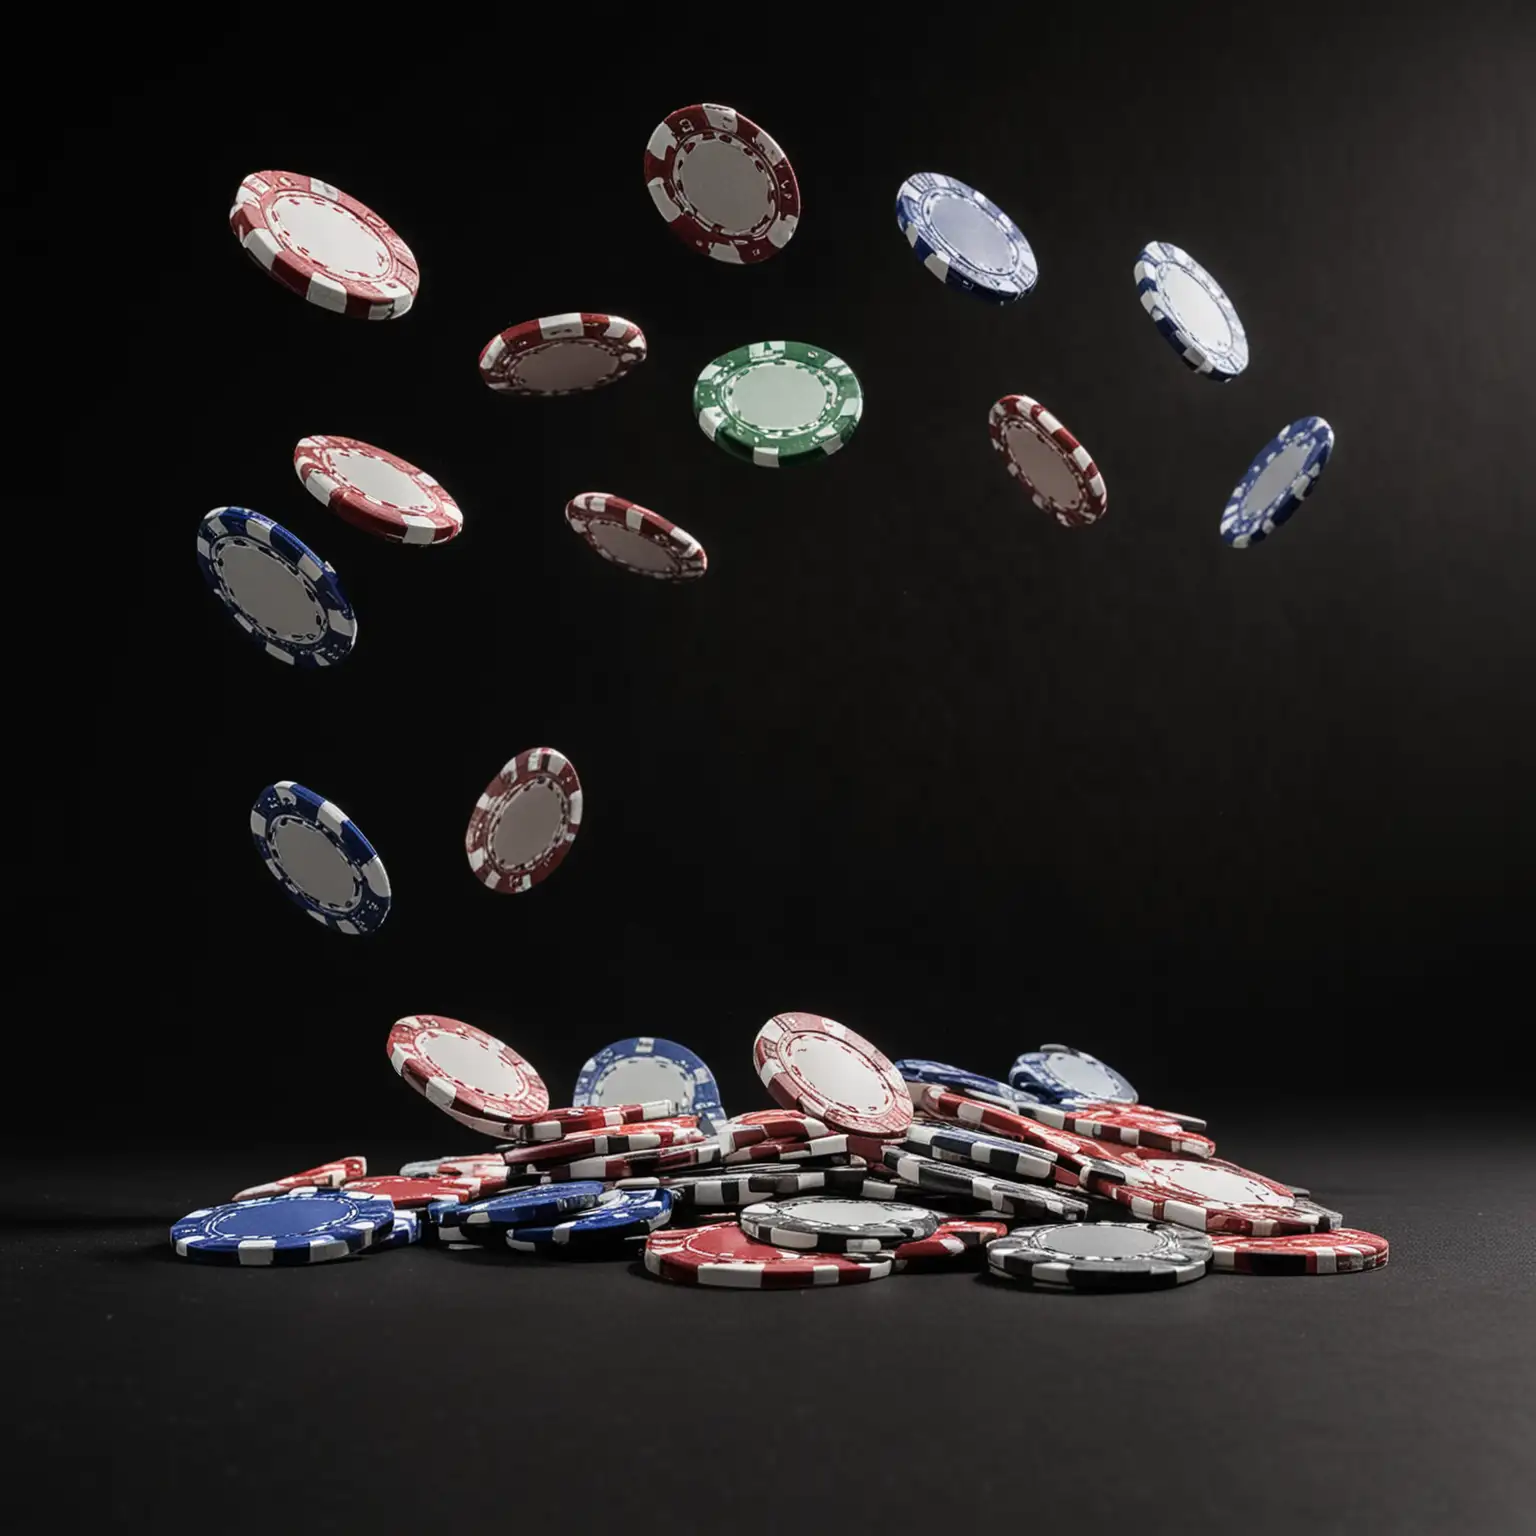 Ten Poker Chips Falling Against Dramatic Black Background